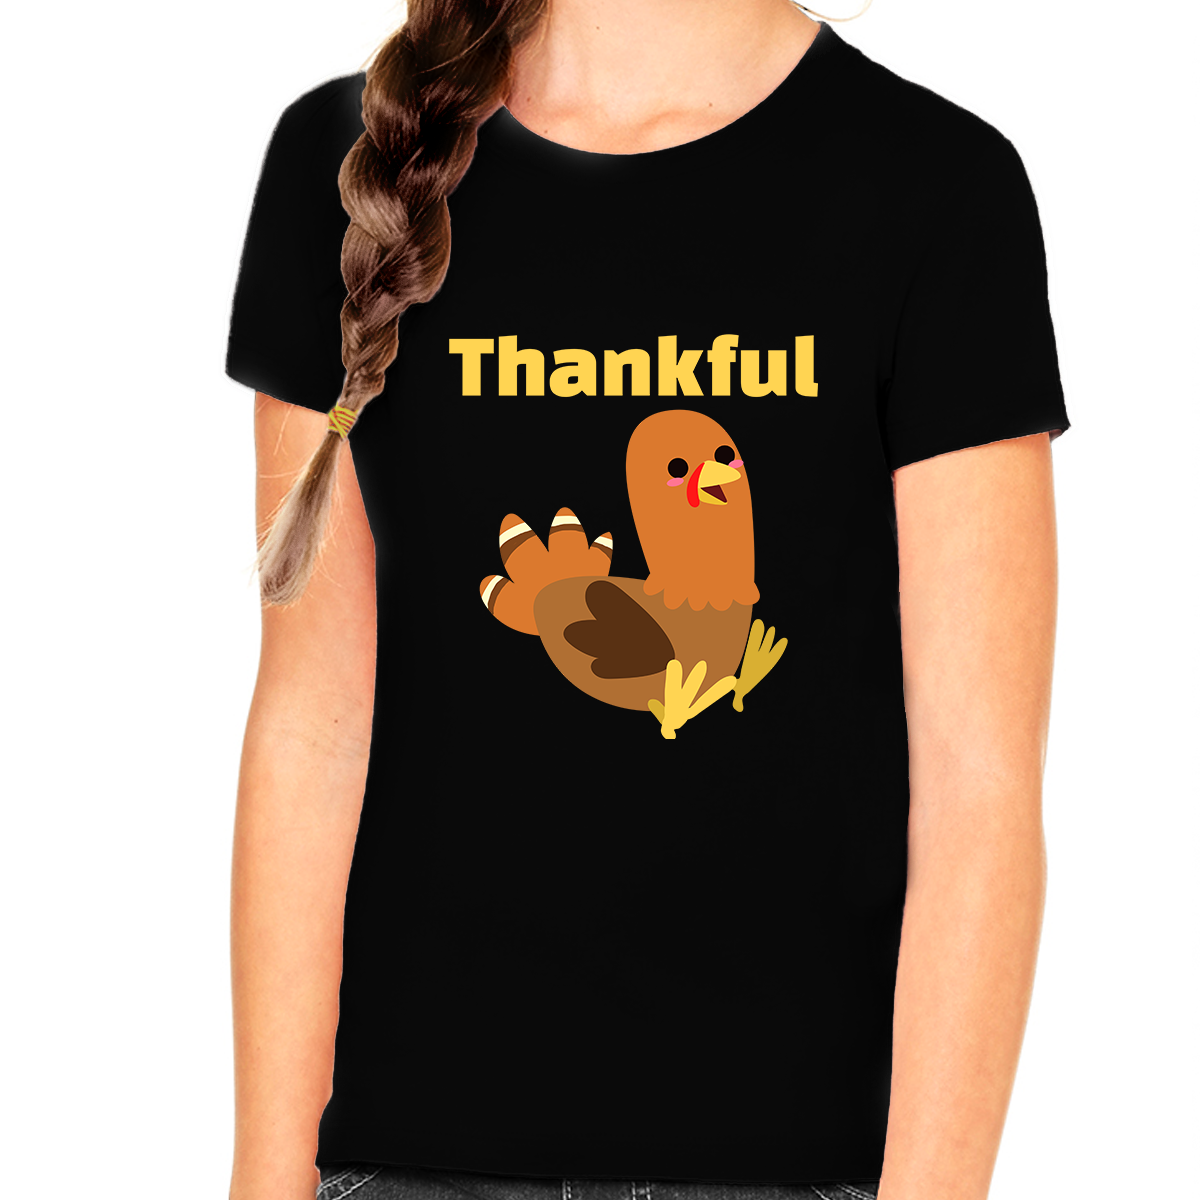 Funny Thanksgiving Shirts for Girls Thanksgiving Gifts Fall Shirts Thanksgiving Outfit Thanksgiving Shirt